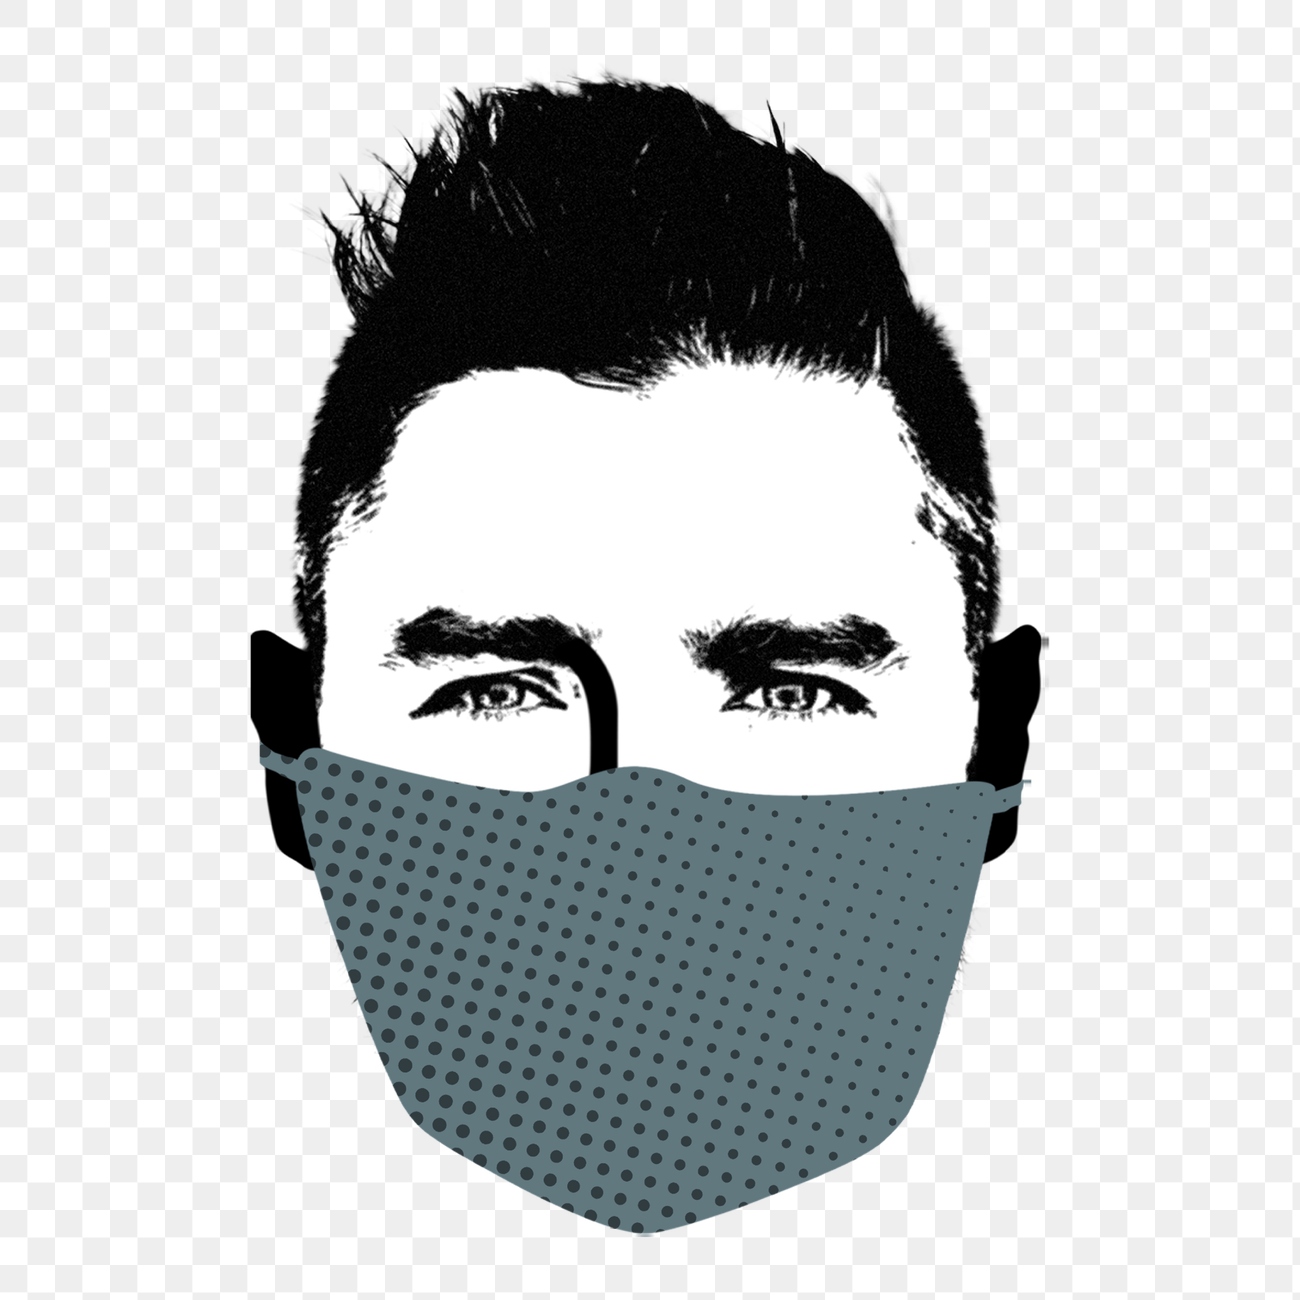 Man Wearing A Face Mask During Coronavirus Pandemictransparent Png